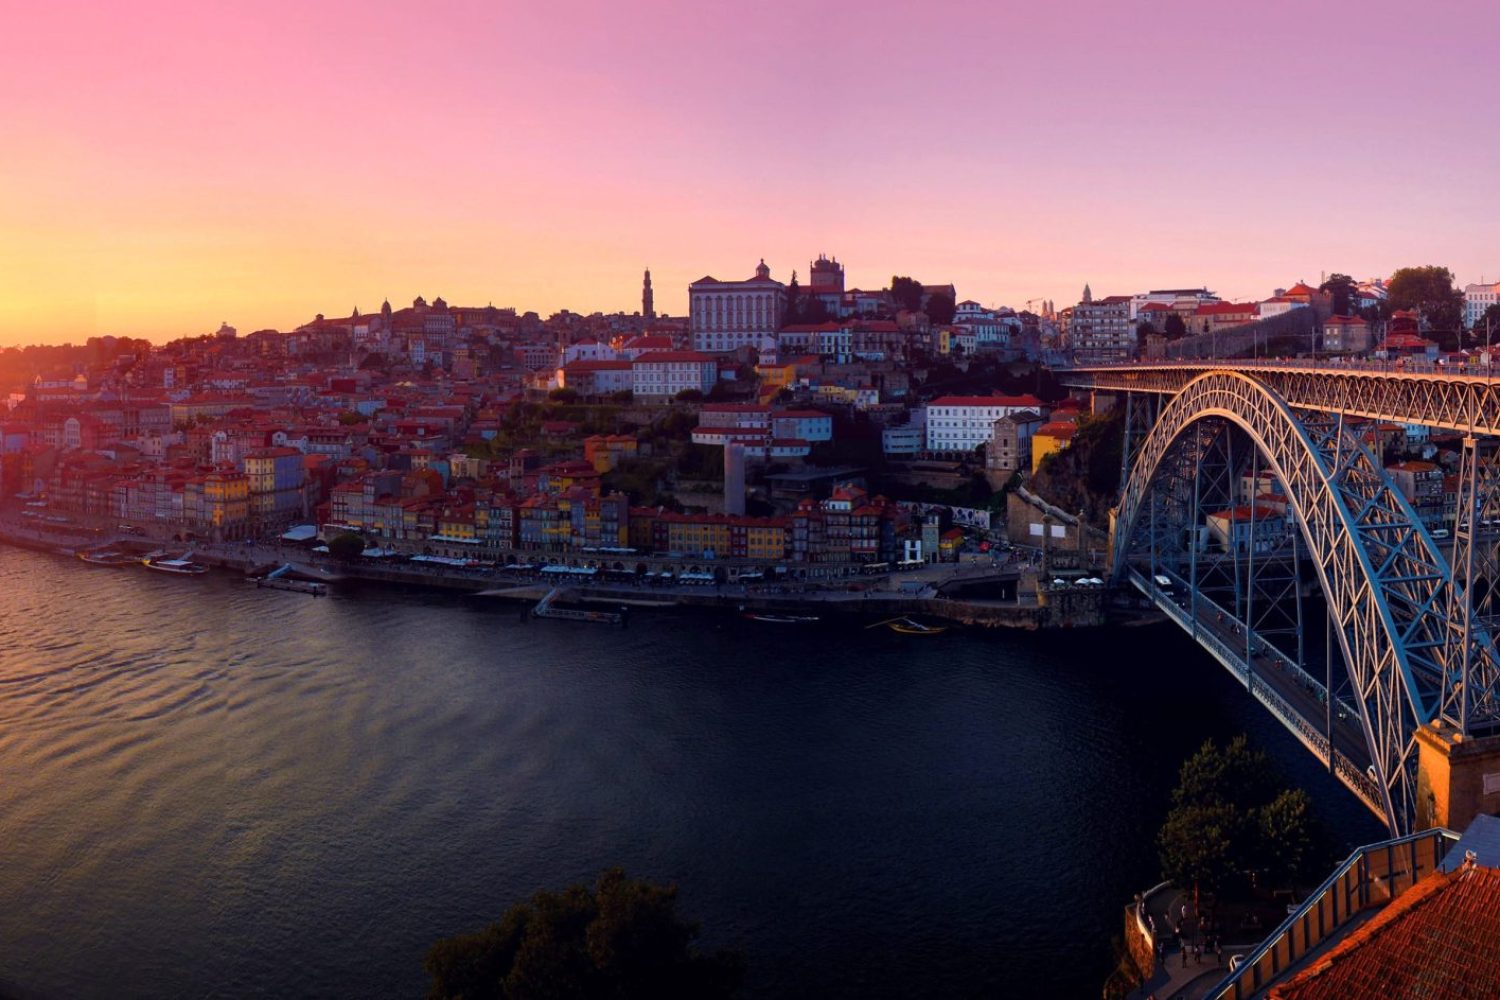 Porto - Portugal - Old Town at Sunset - Douro River - Luis I Bridge - Ribeira - Port Wine Cellars - UNESCO World Heritage Site